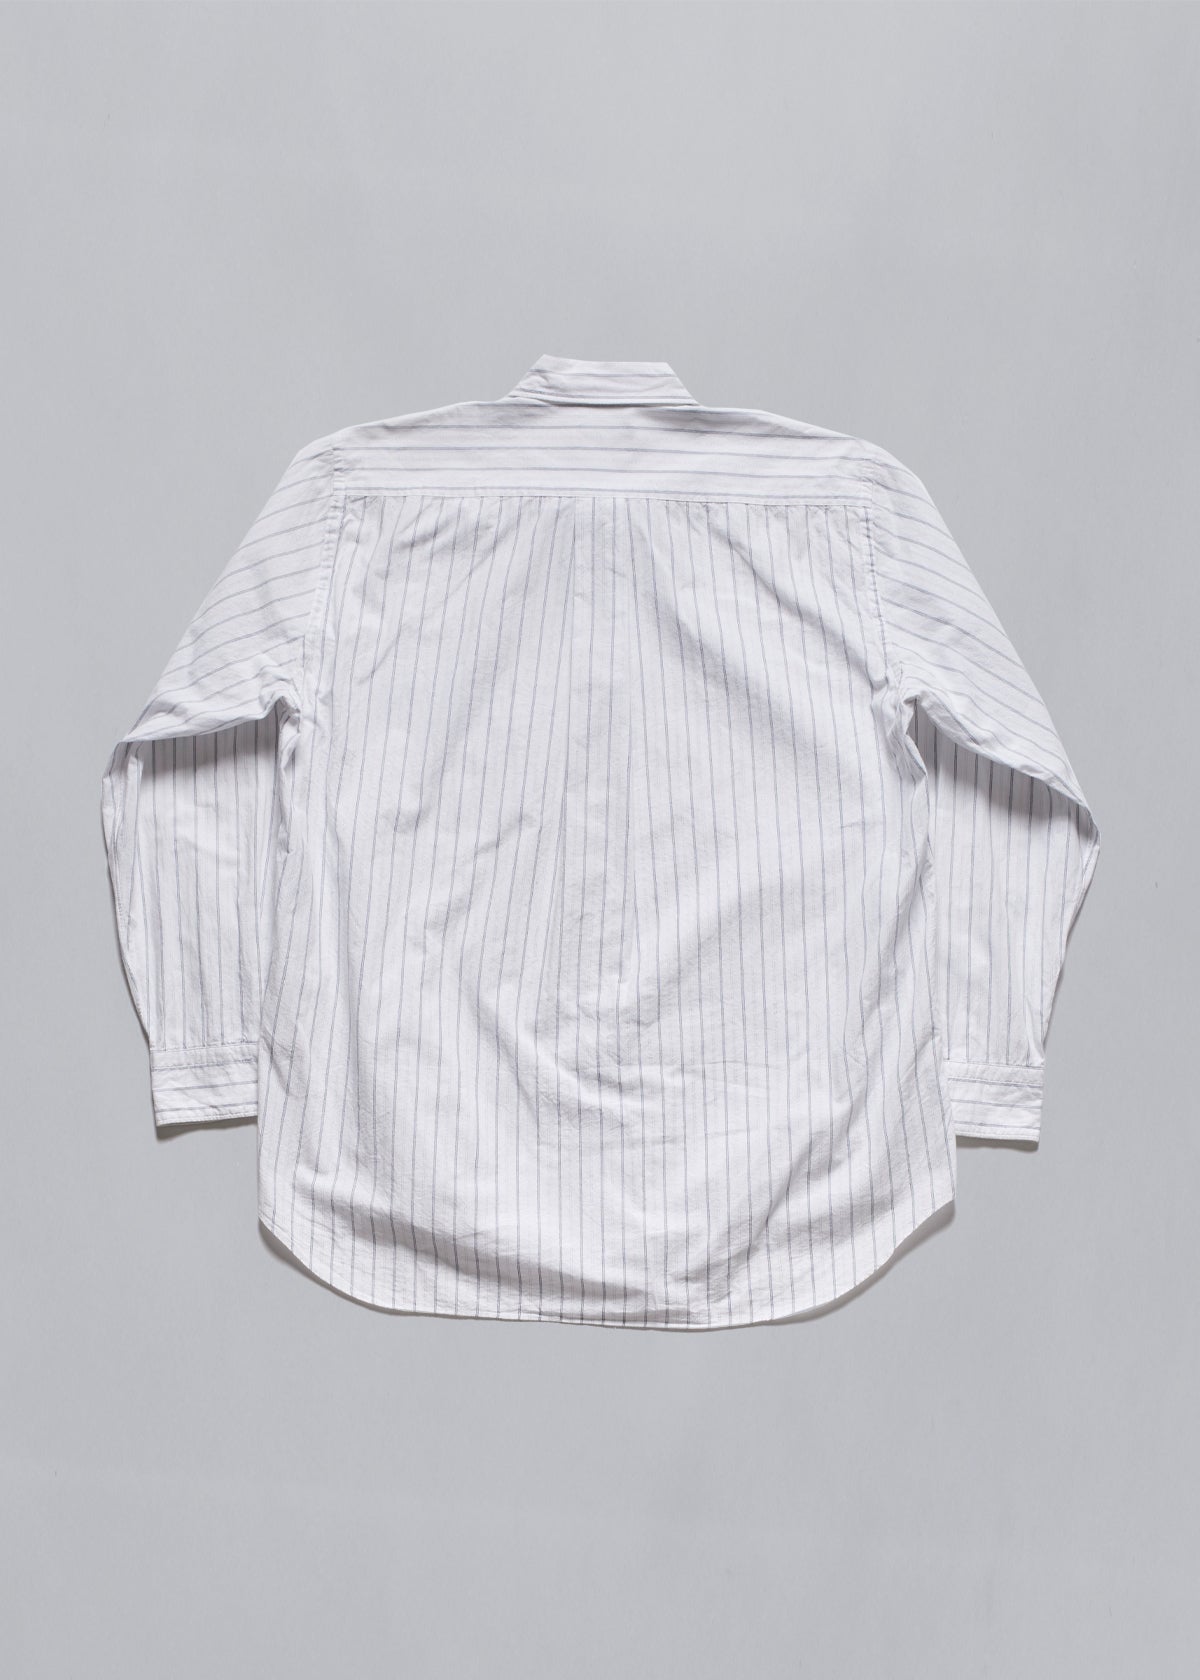 CDGH Big Buttons Stripped Shirt 2002 - Medium - The Archivist Store